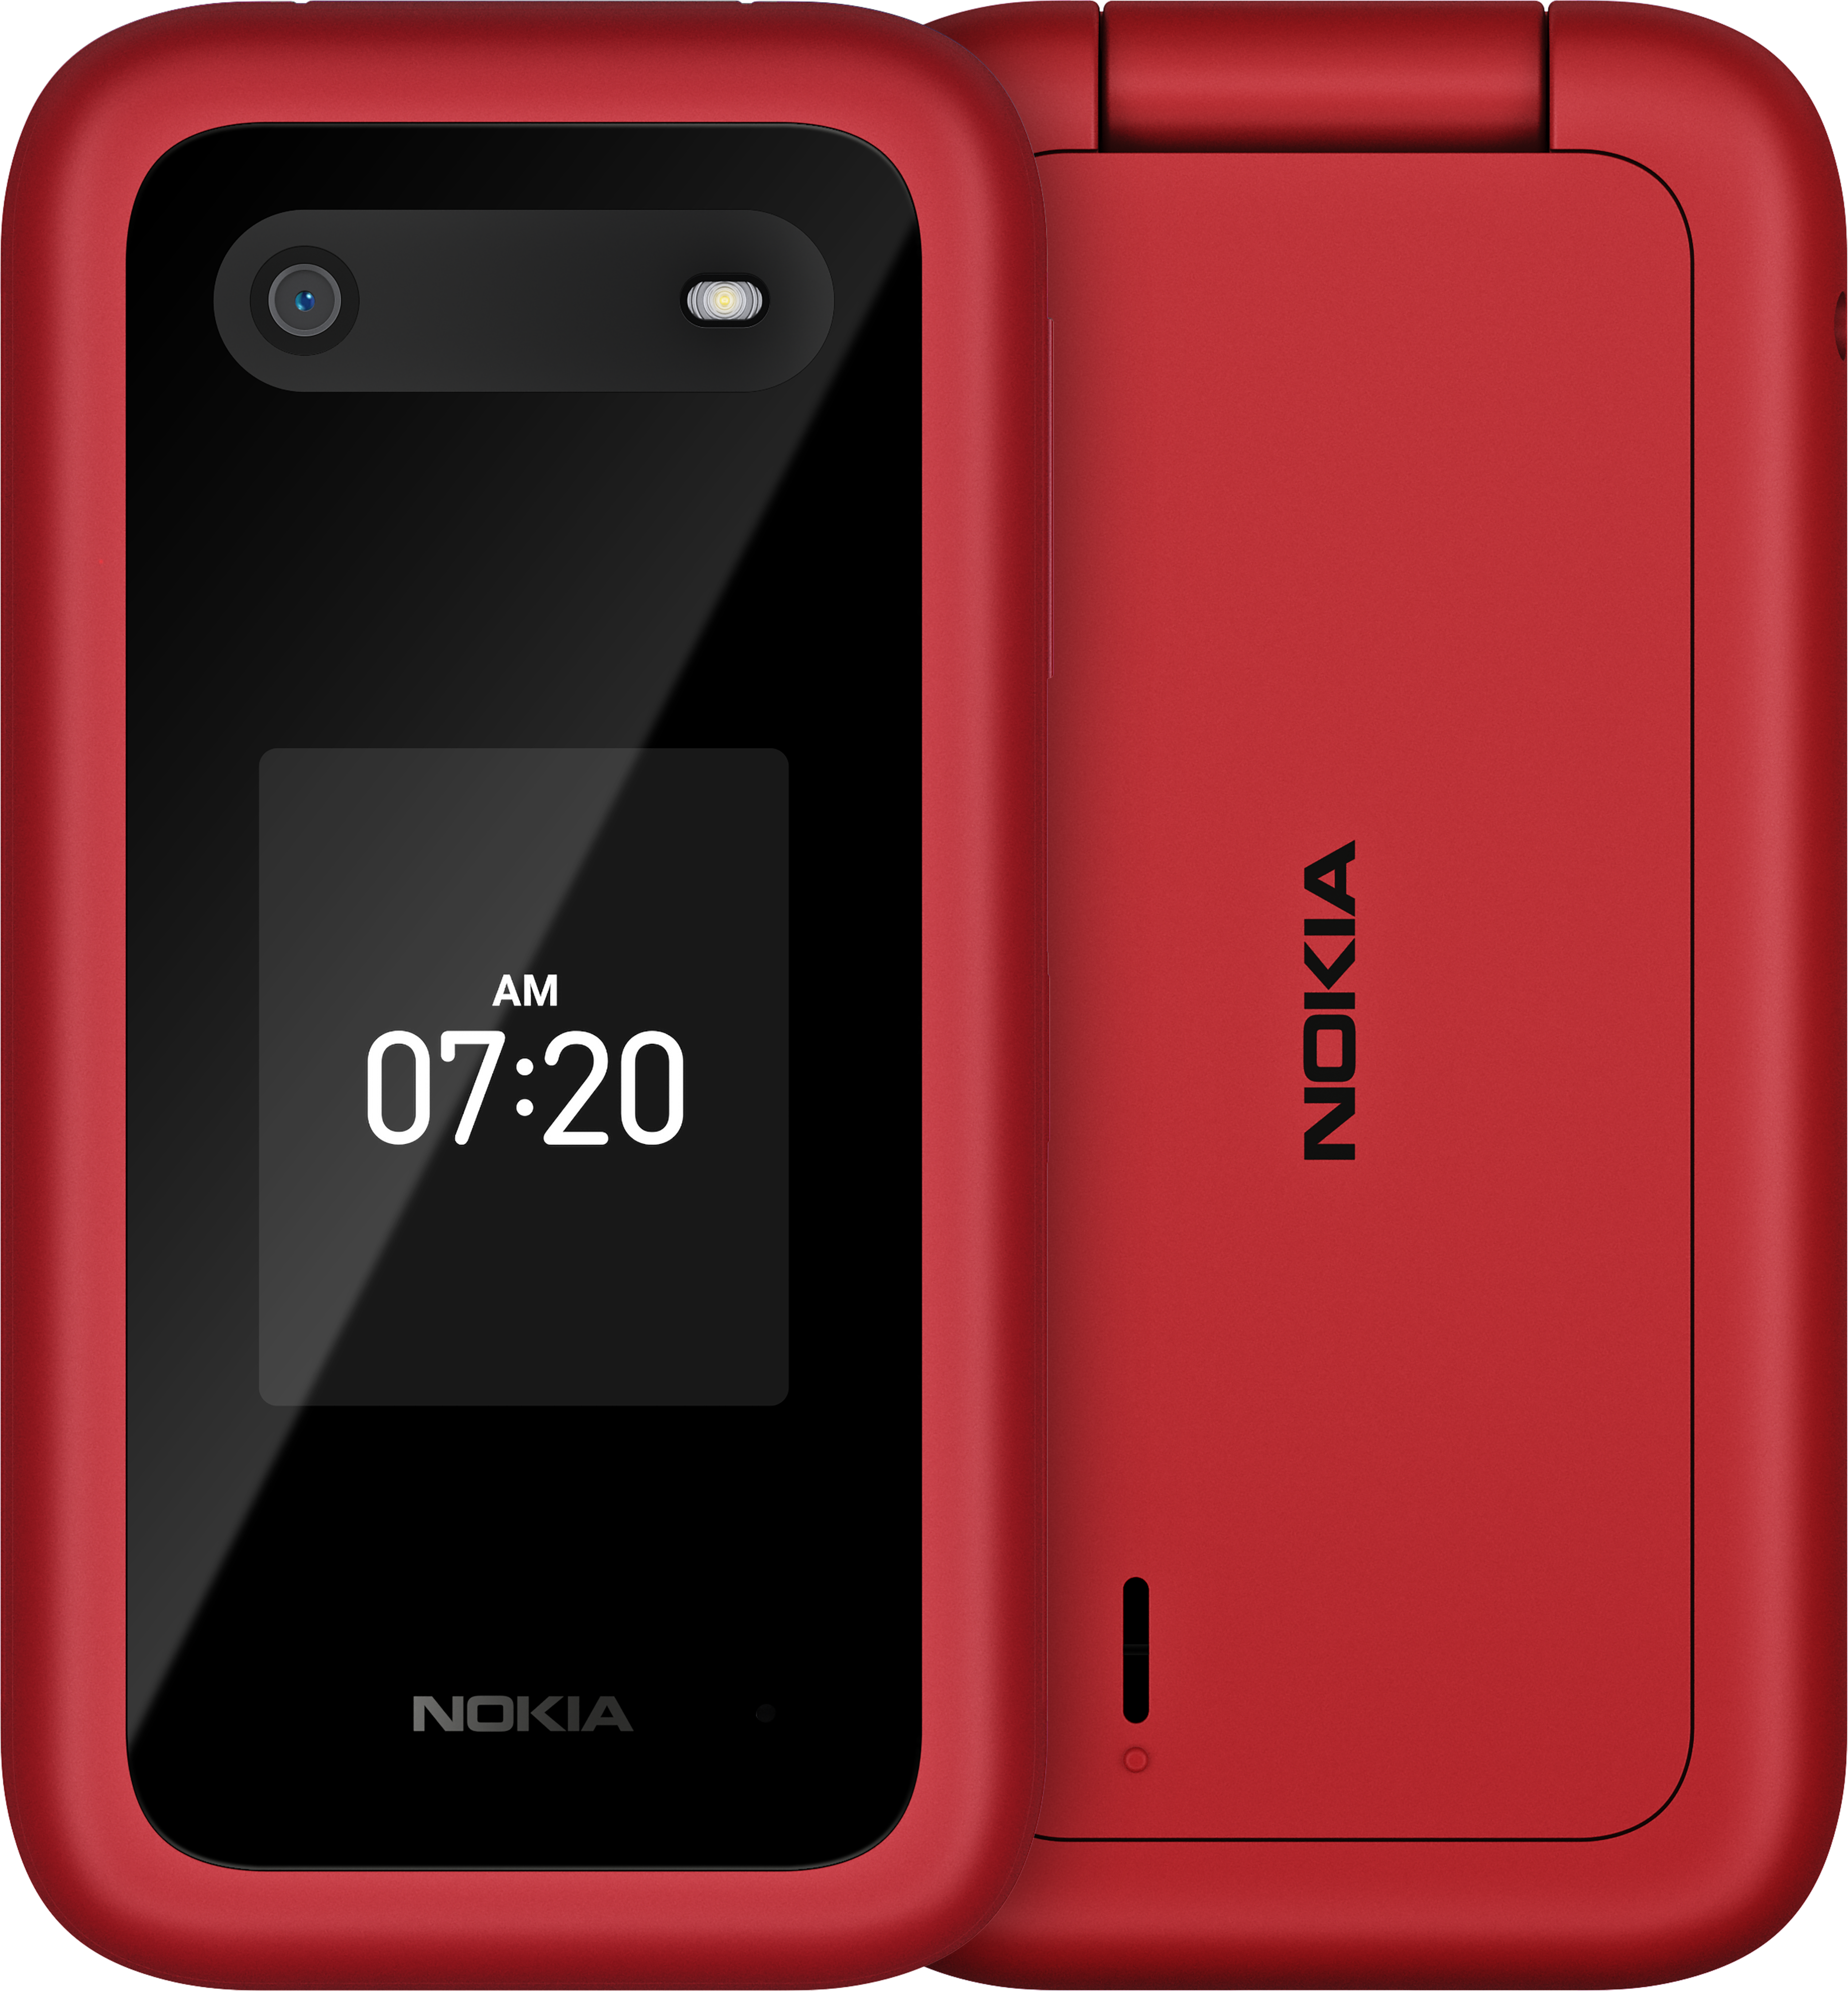 Vol koffer Ontleden Nokia 2780 Flip feature mobile phone